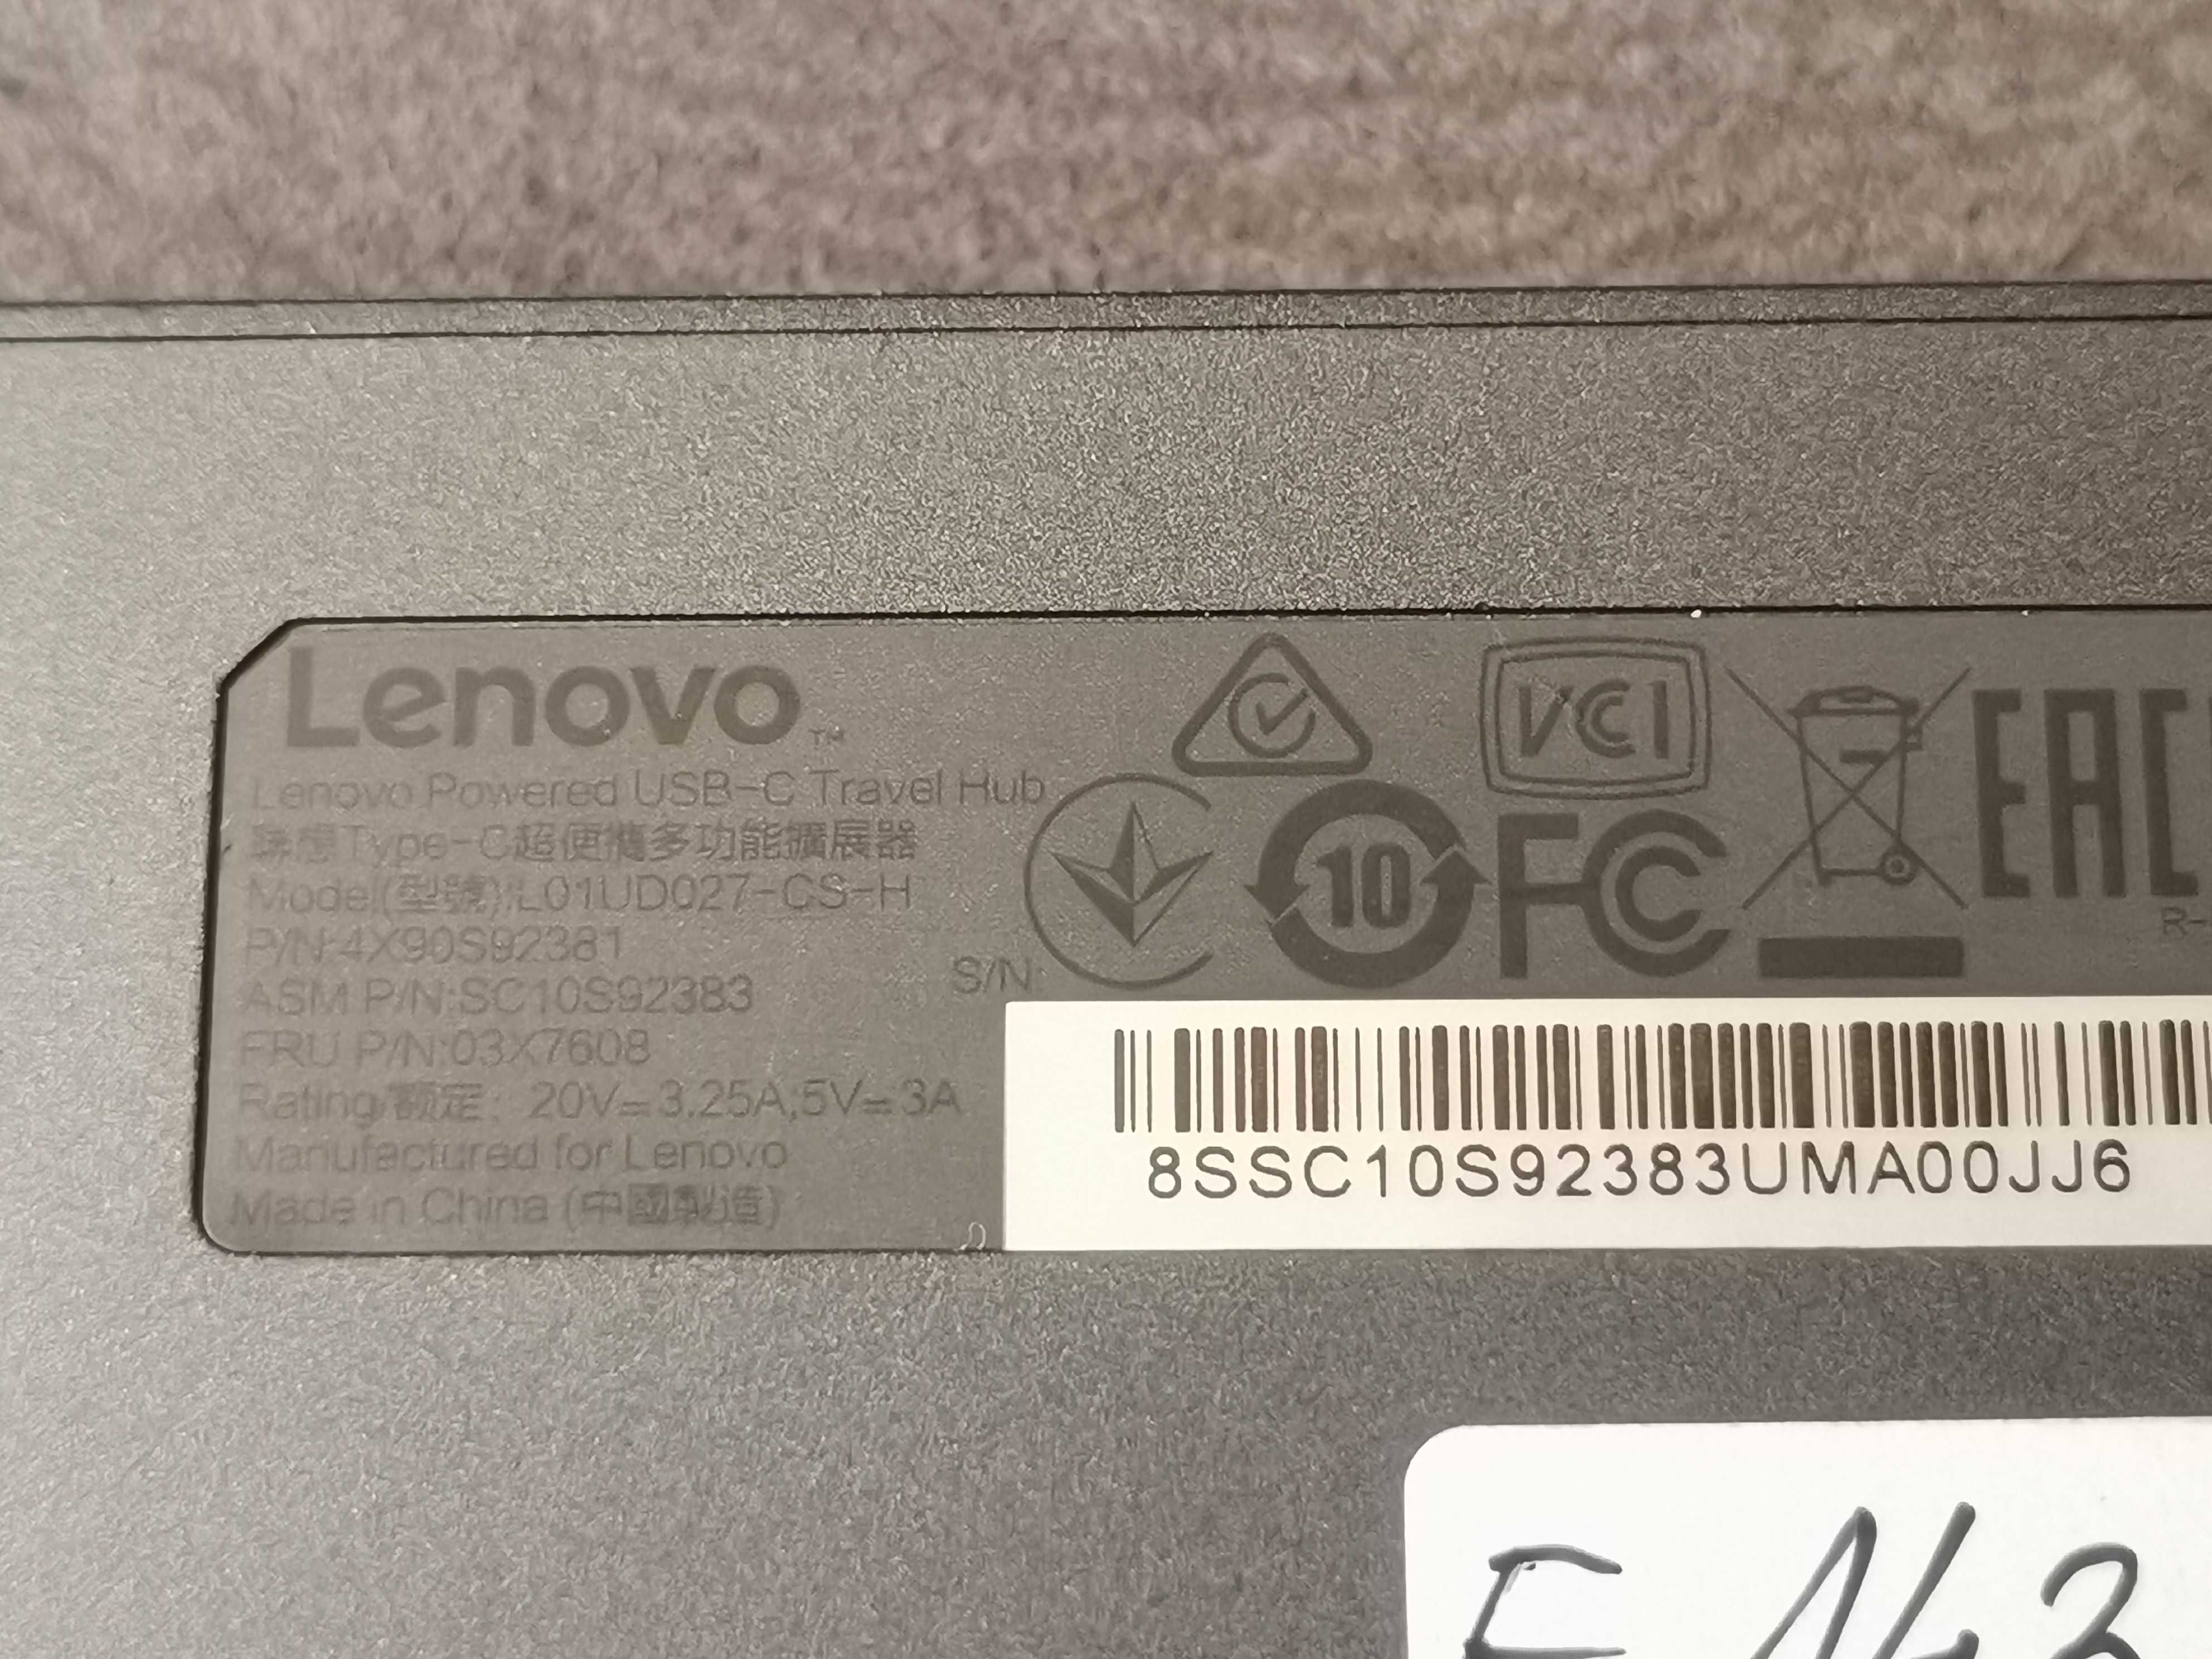 Lenovo Powered USB C Travel Hub, docking USB, HDMI, VGA, RJ-45)